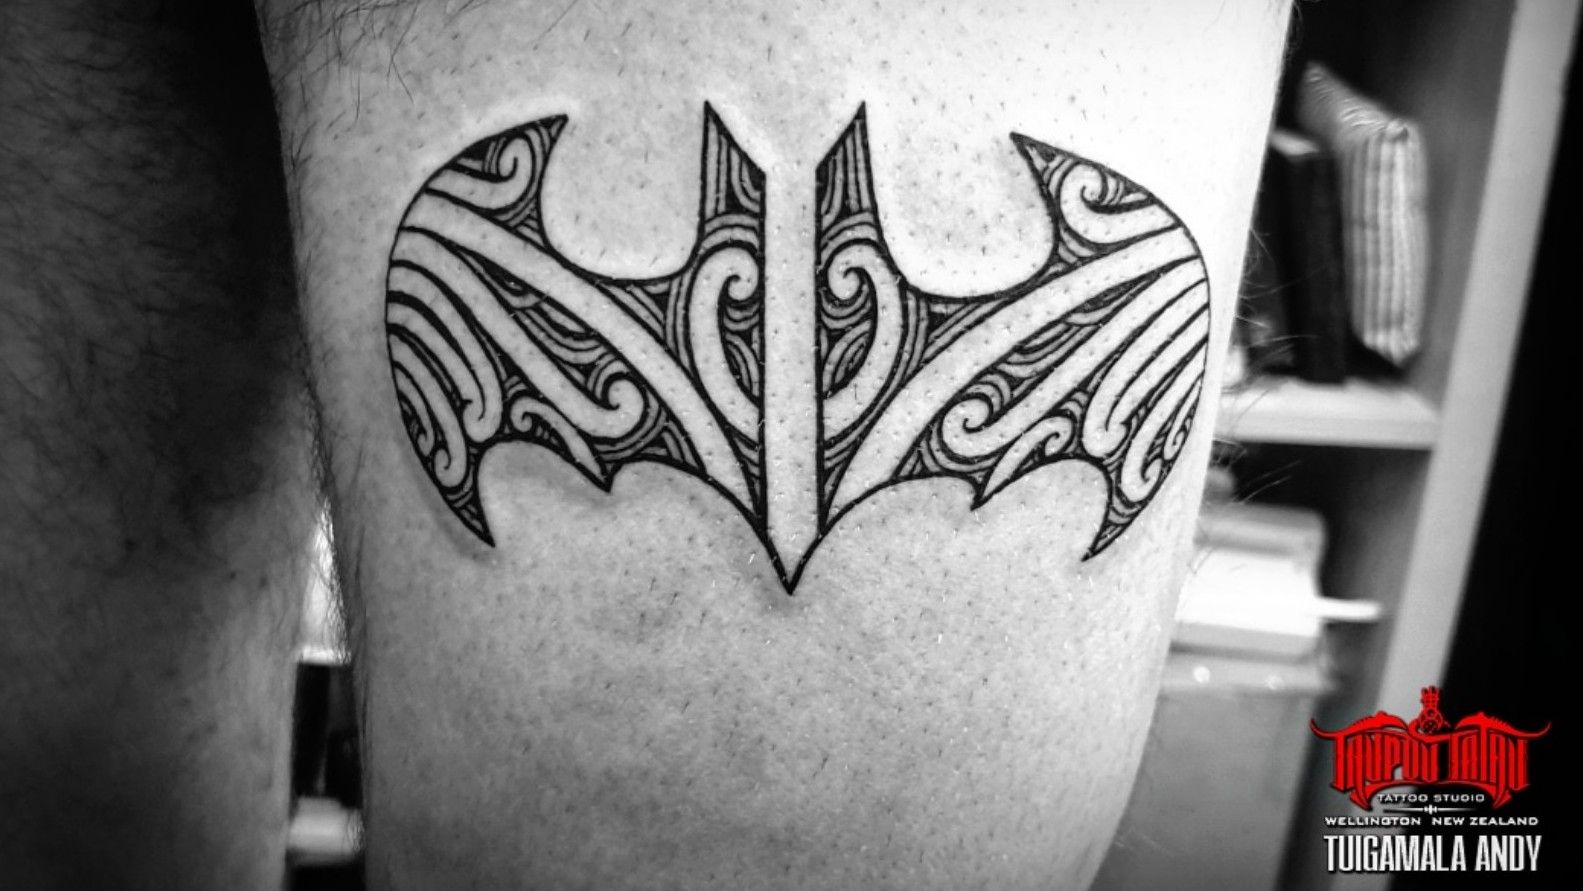 Tribal or Floral Batman Tattoo by ryderman on DeviantArt